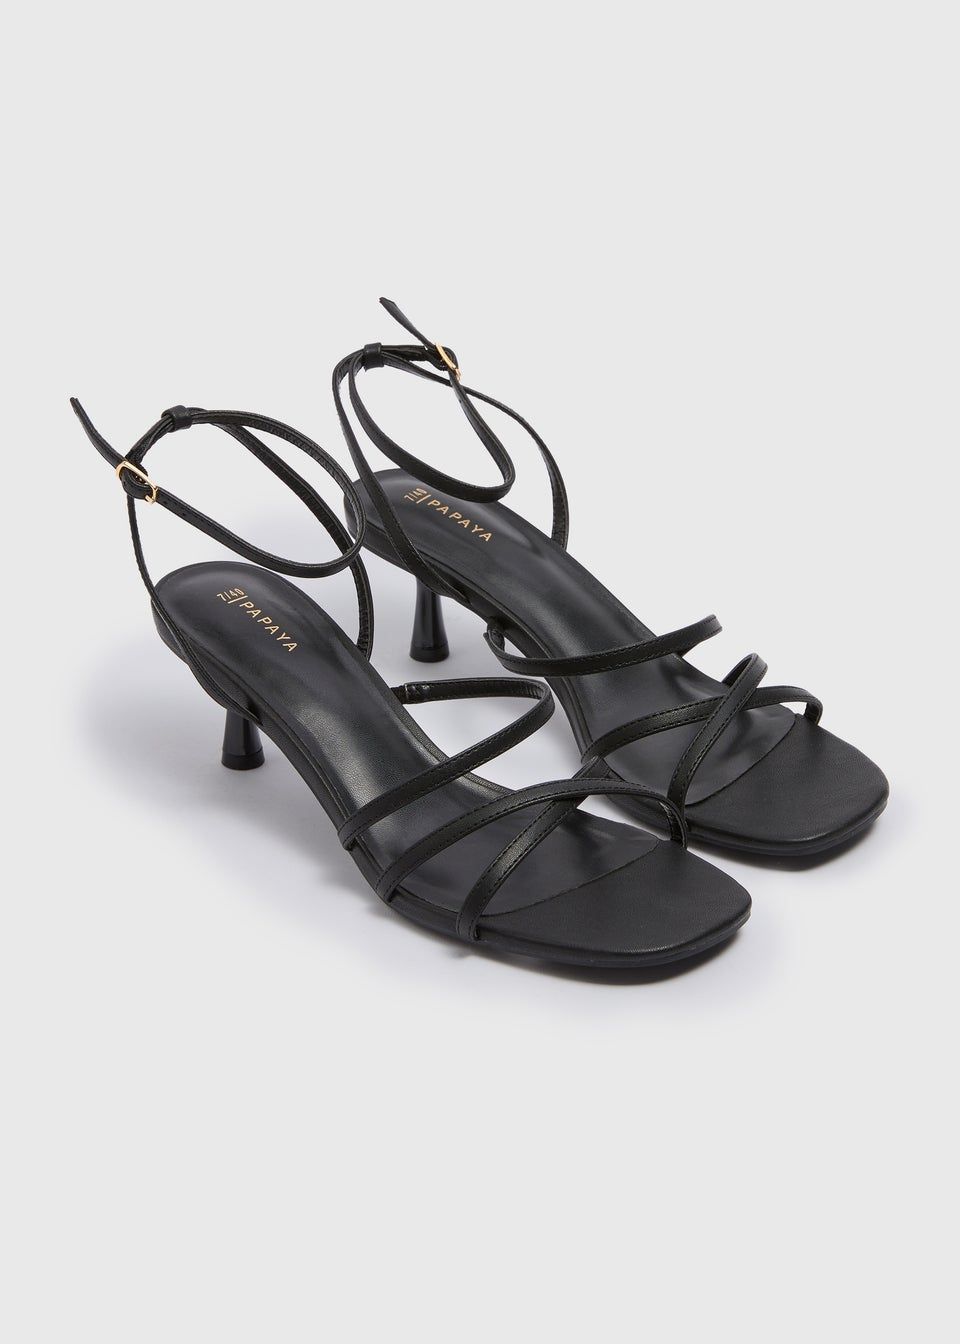 Black Strappy Kitten Heels - Size 5 | Matalan (UK)